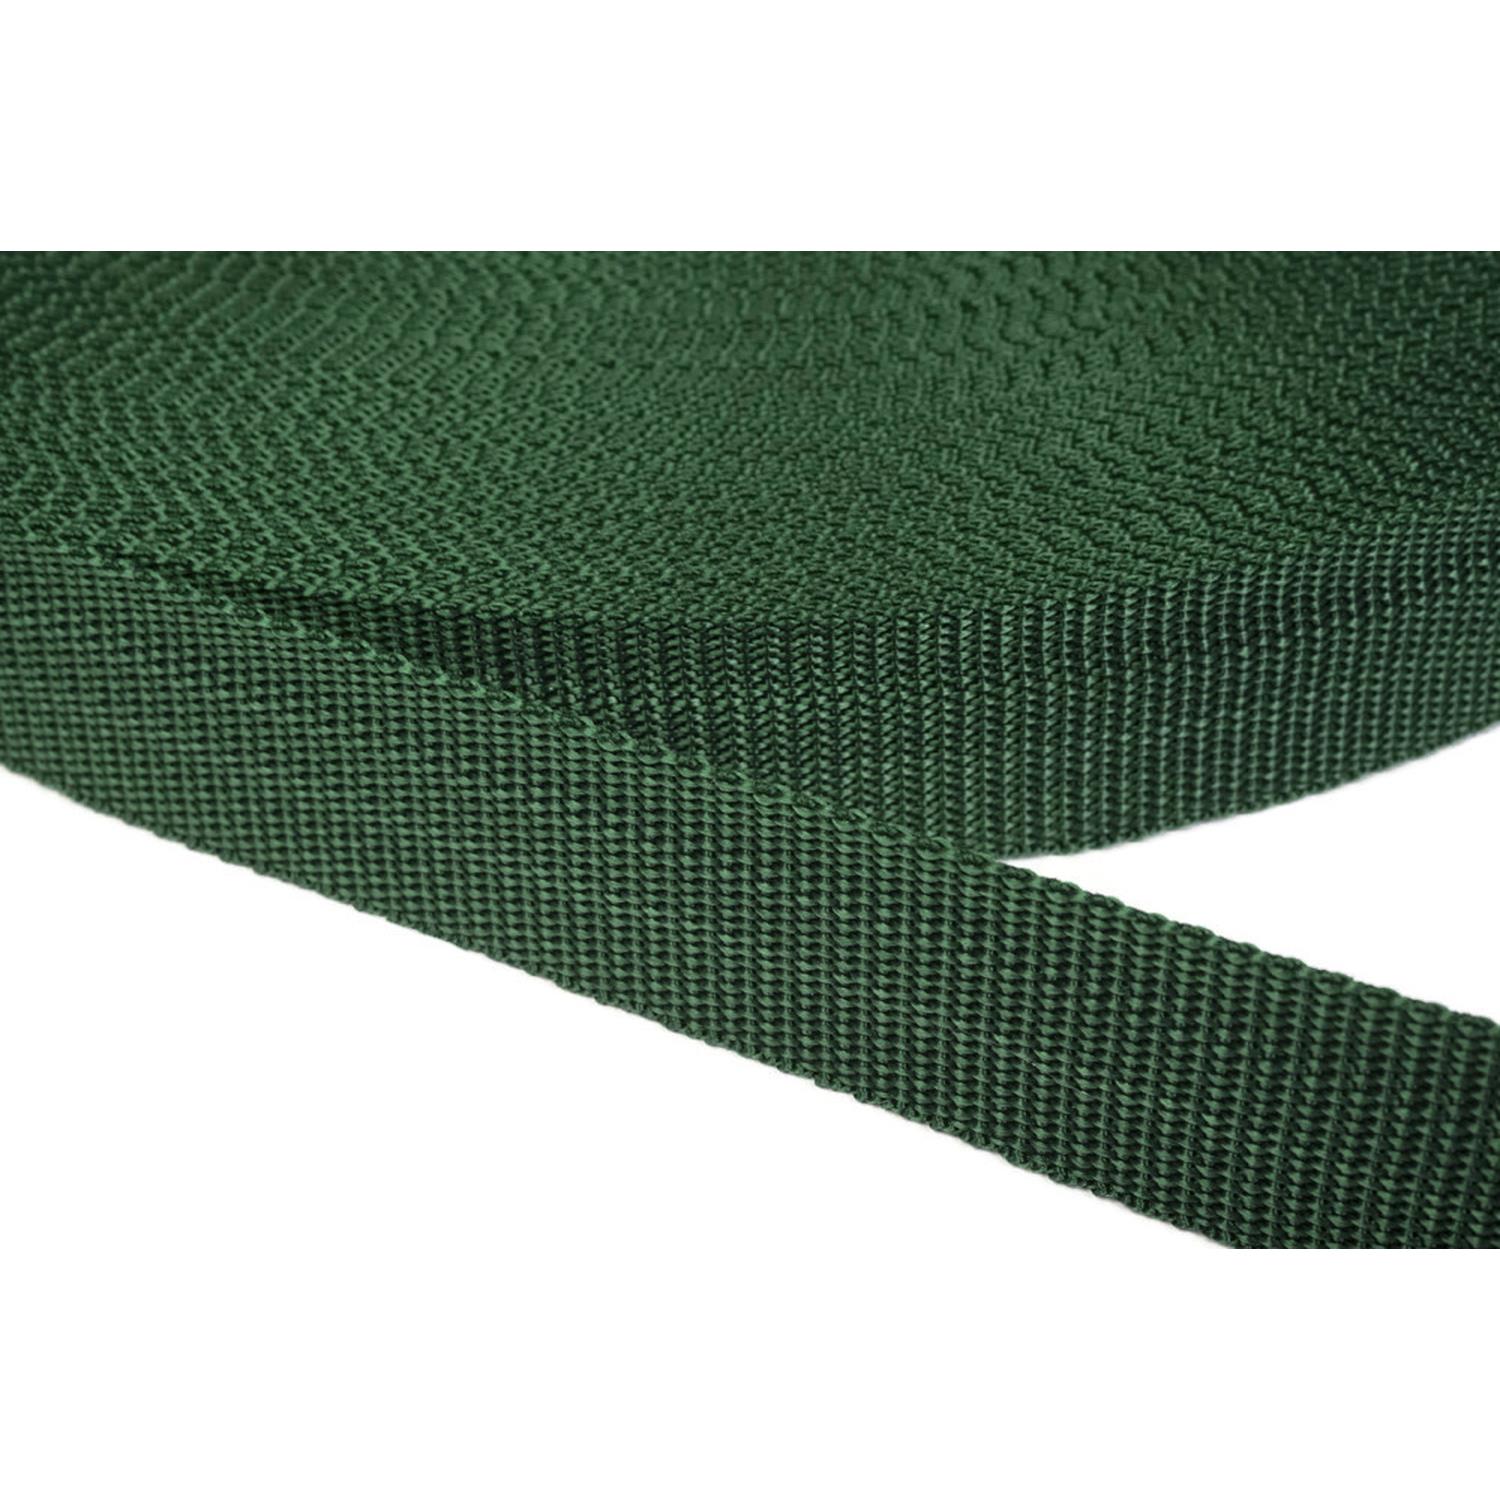 Gurtband 50mm breit aus Polypropylen in 41 Farben 35 - dunkelgrün 12 Meter